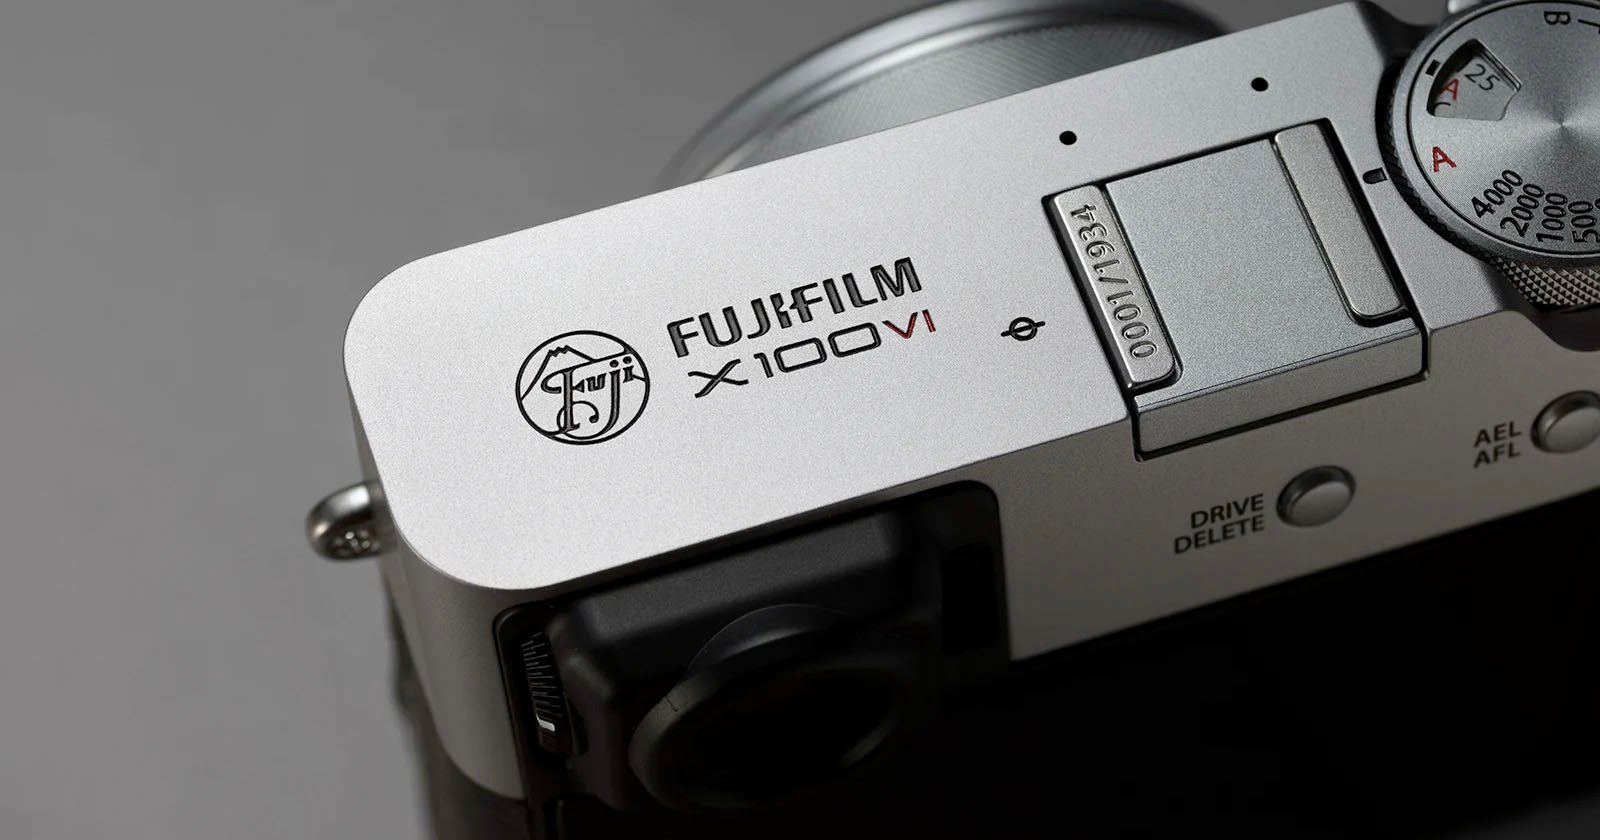  fujifilm will sell just 300 limited-edition x100vi cameras 